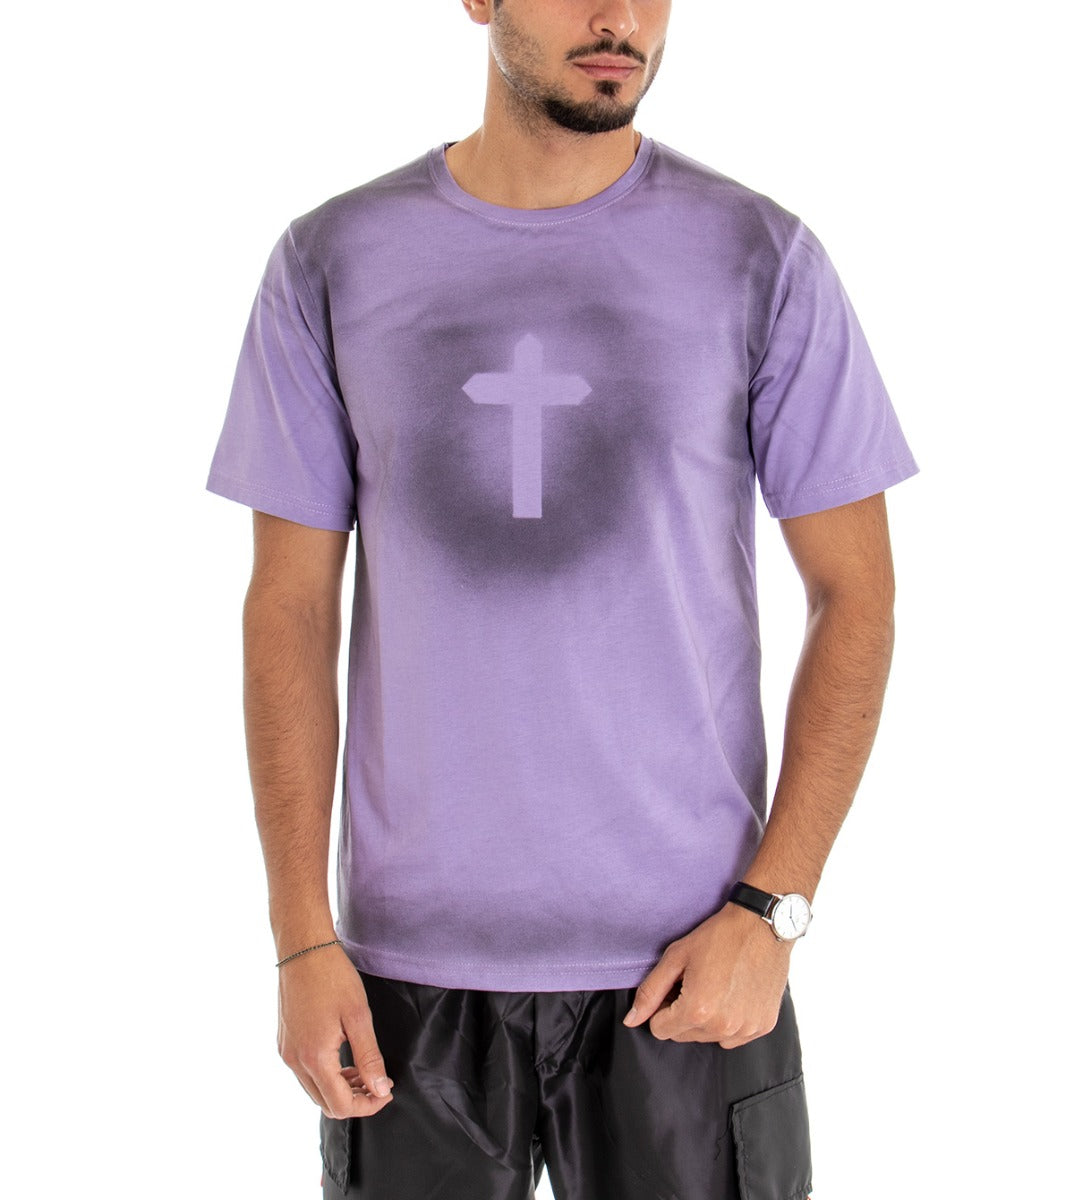 Men's T-shirt Short Sleeves Cotton Round Neck Casual Cross Purple GIOSAL